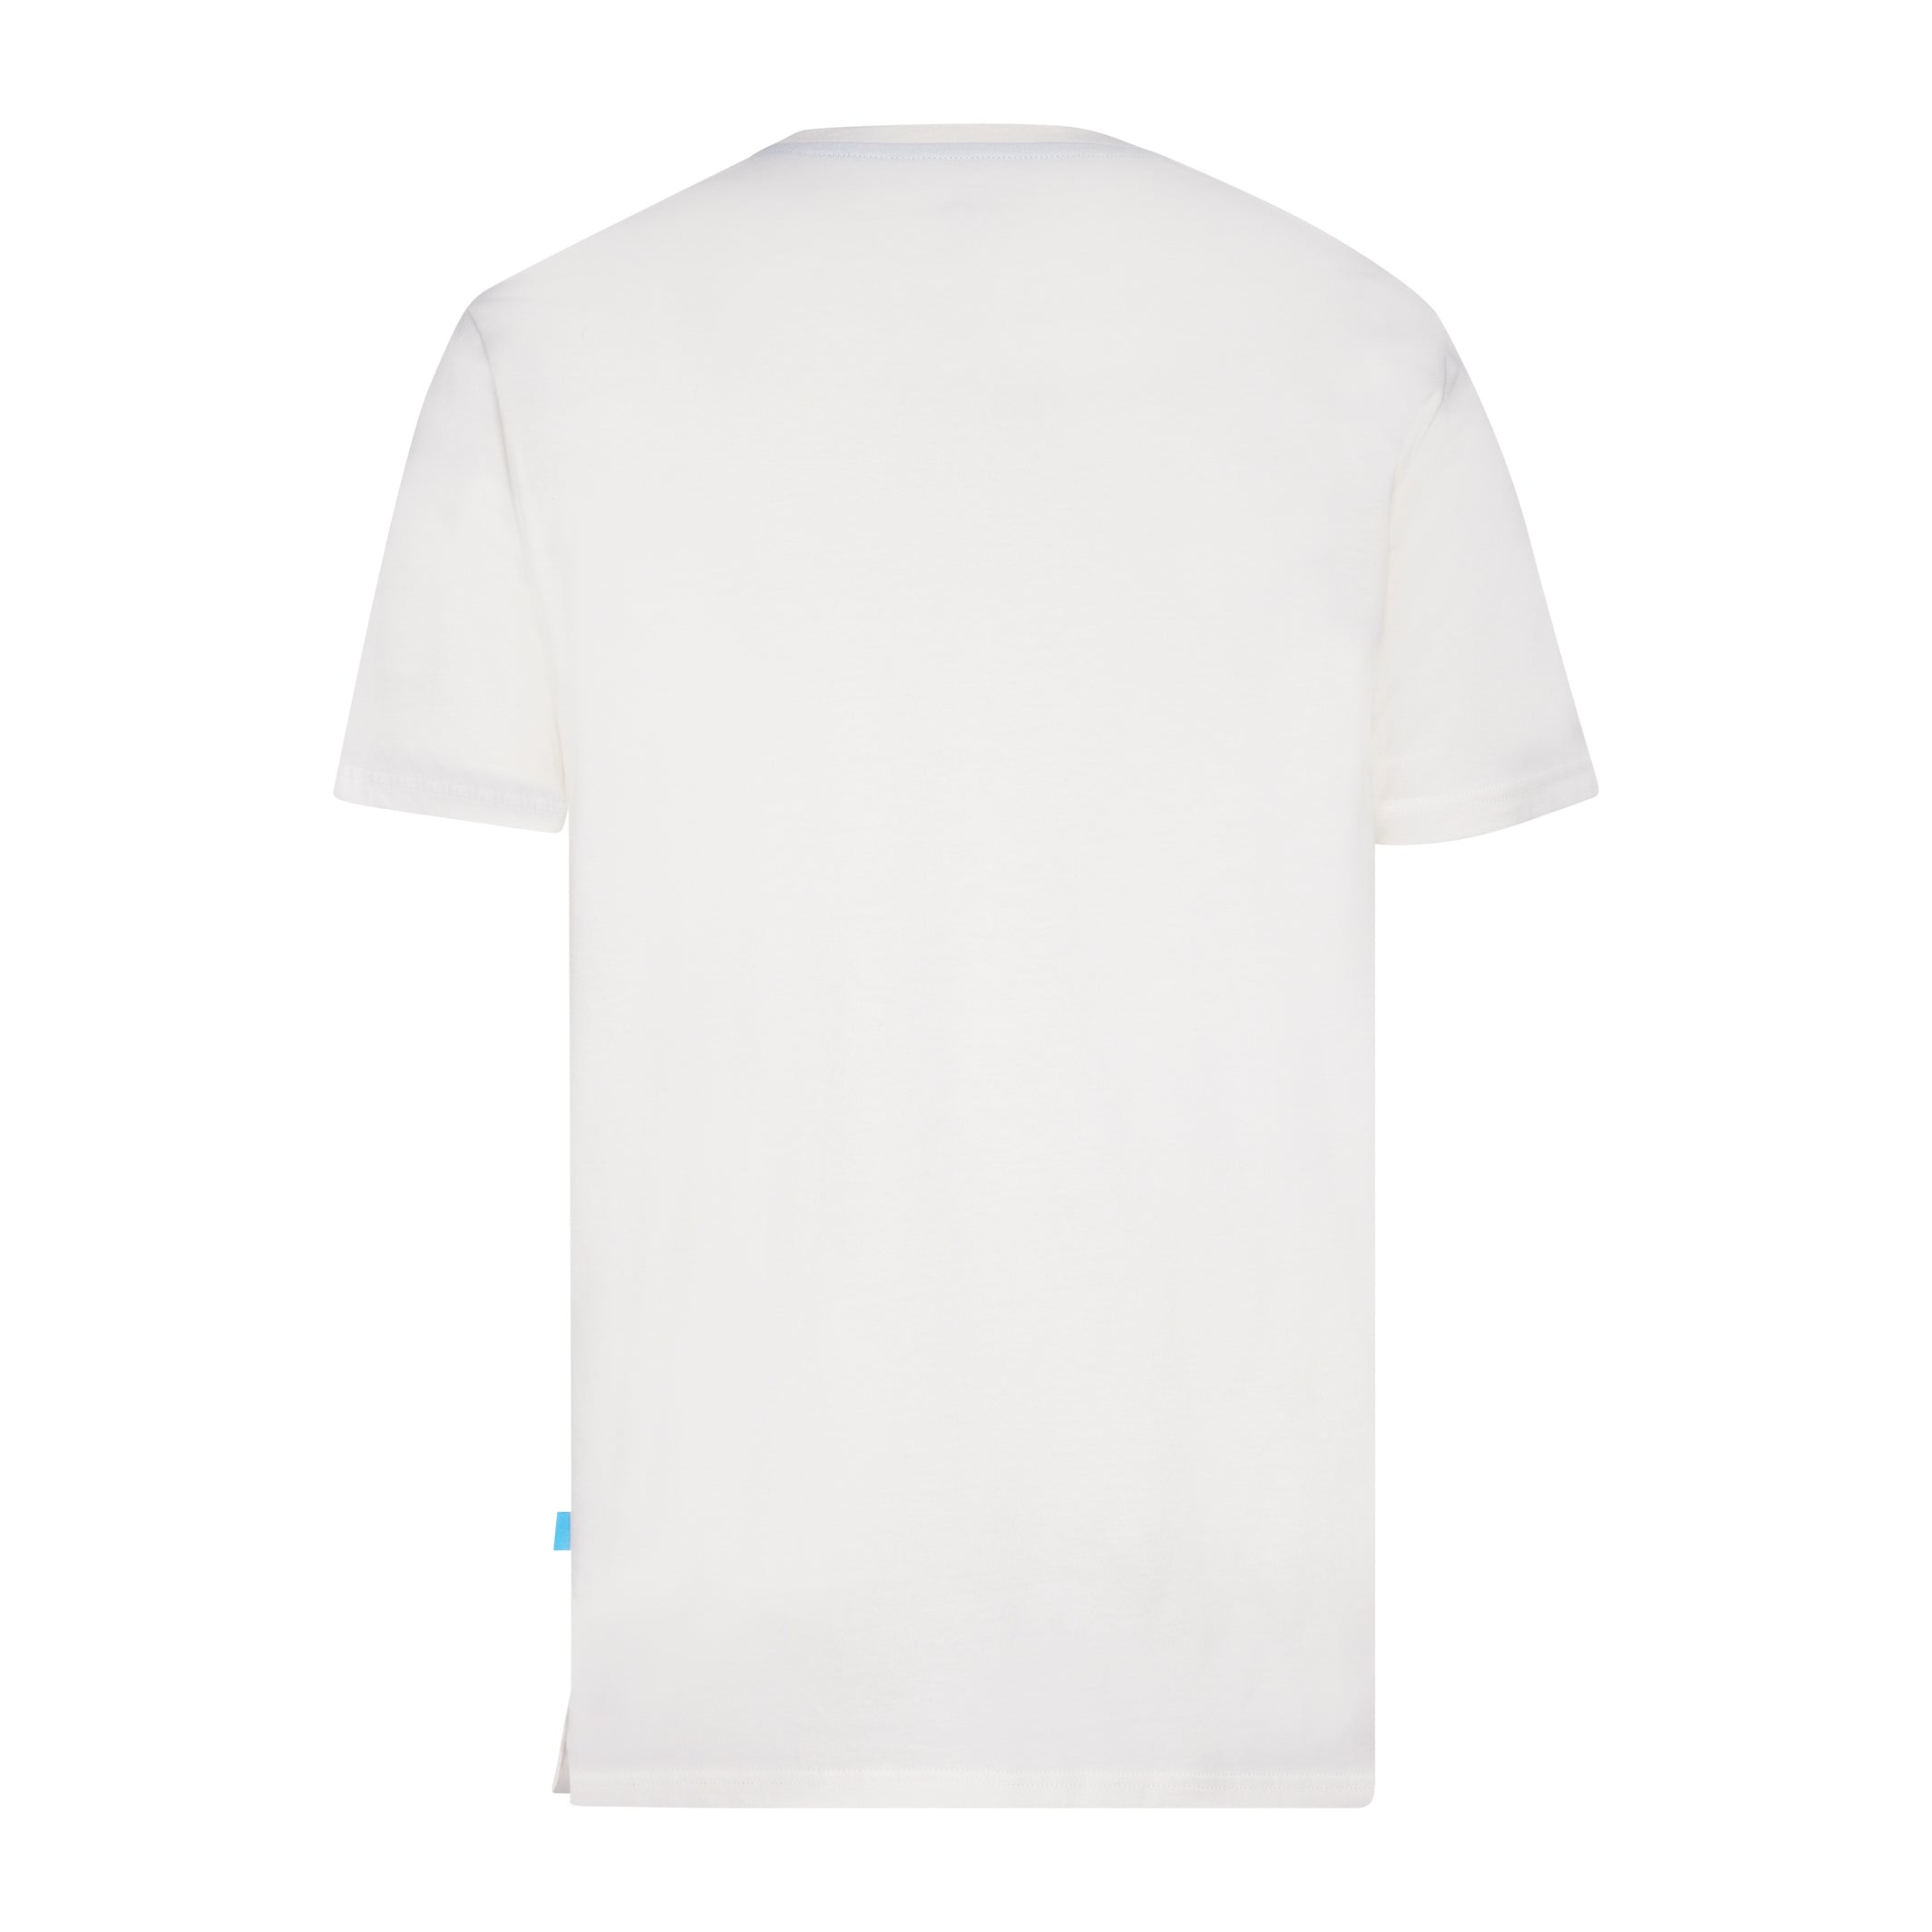 Men's Cream T-Shirt Court Print Back View